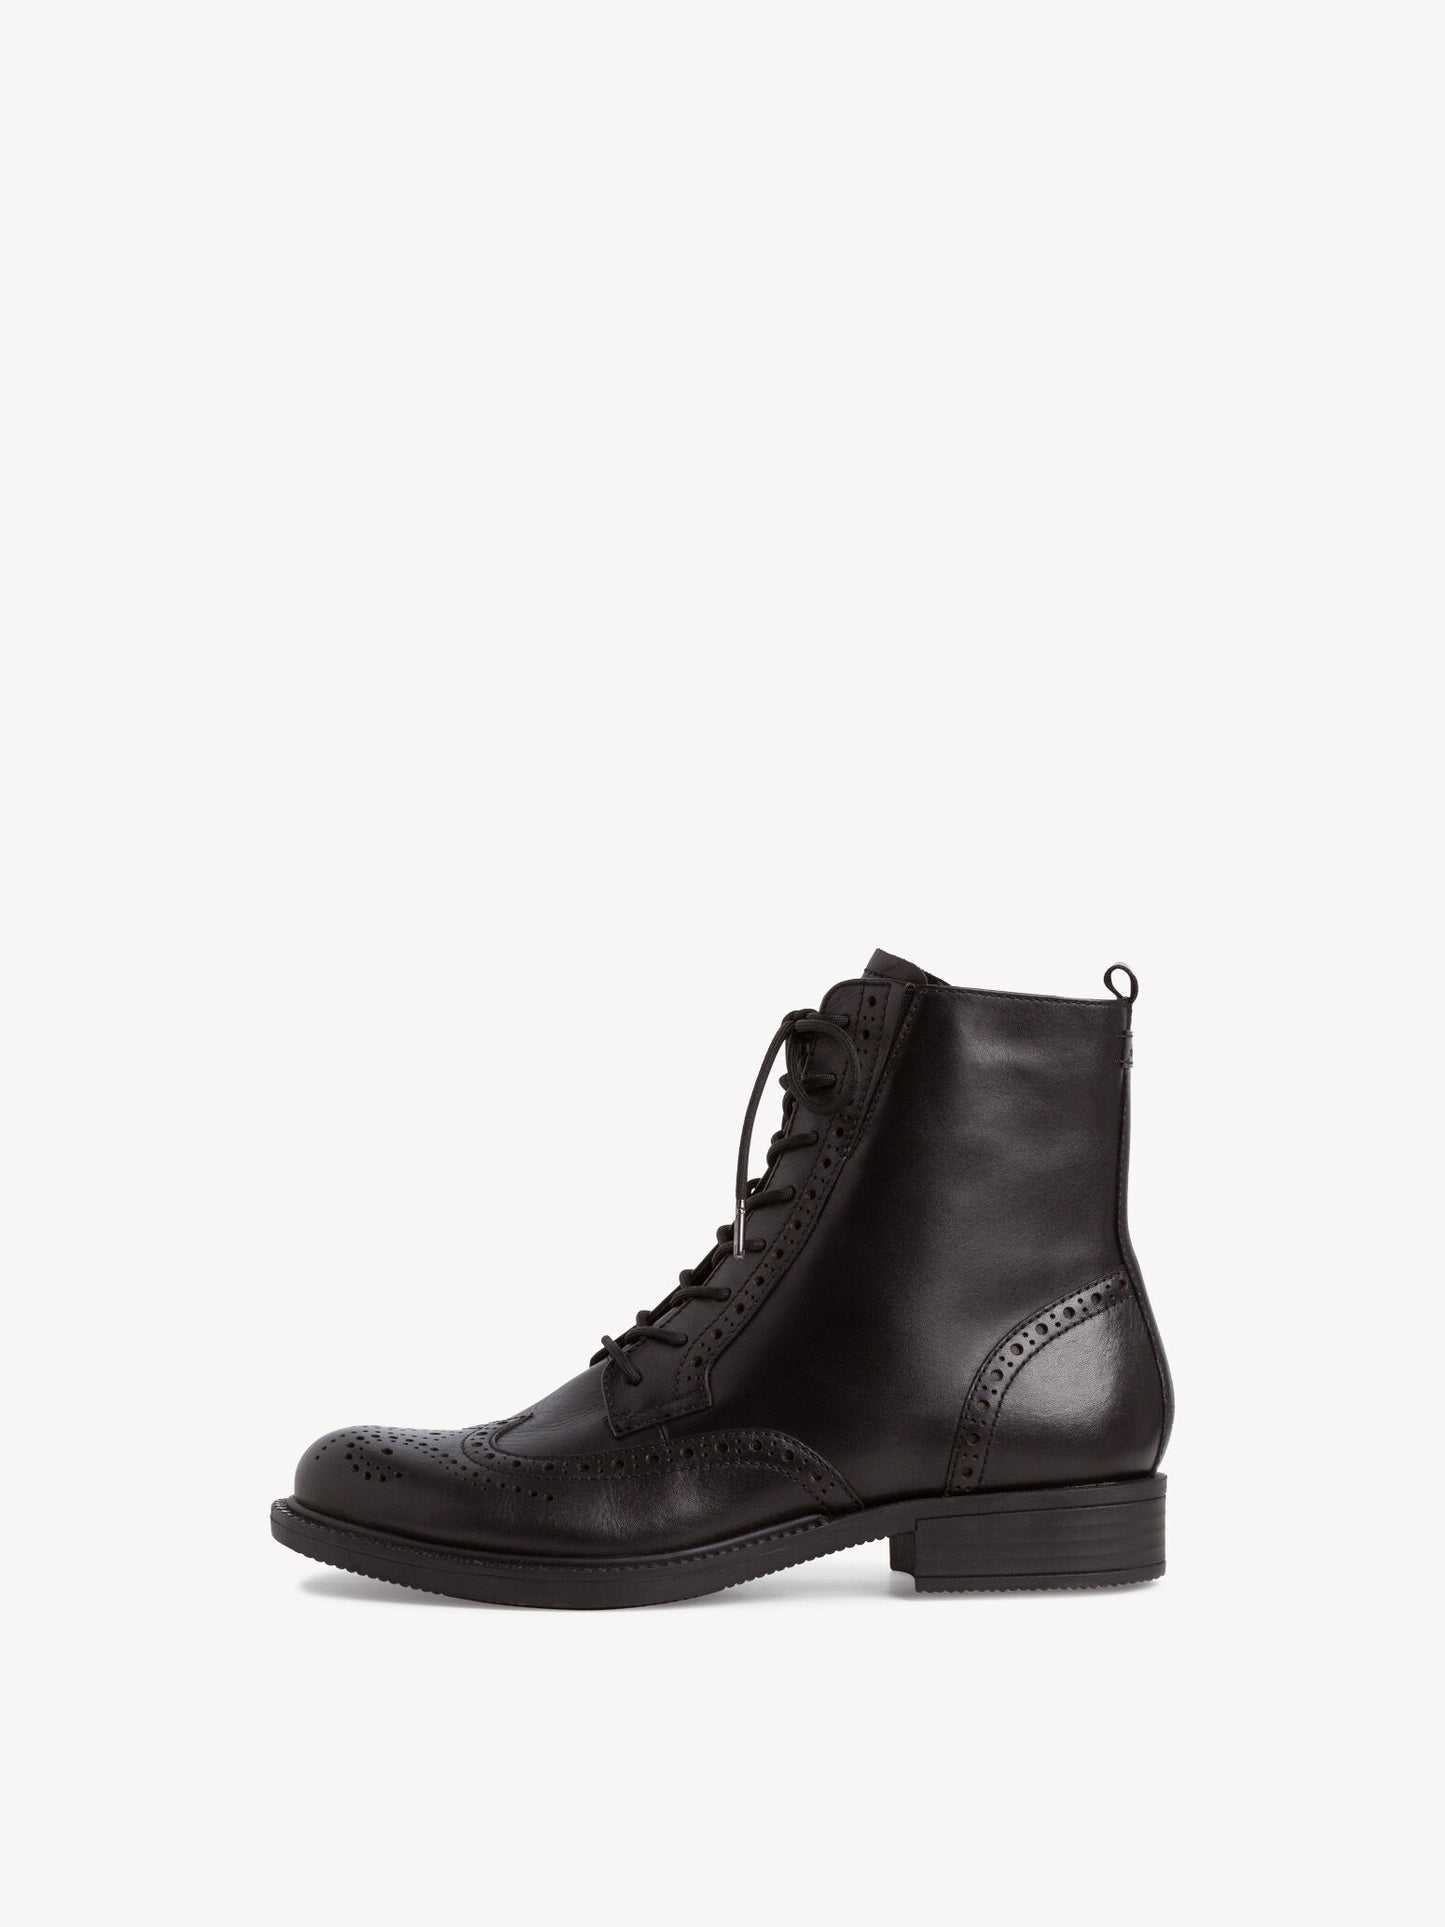 Tamaris Women's 1-25106-27 Leather Brogue Ankle Boots Black